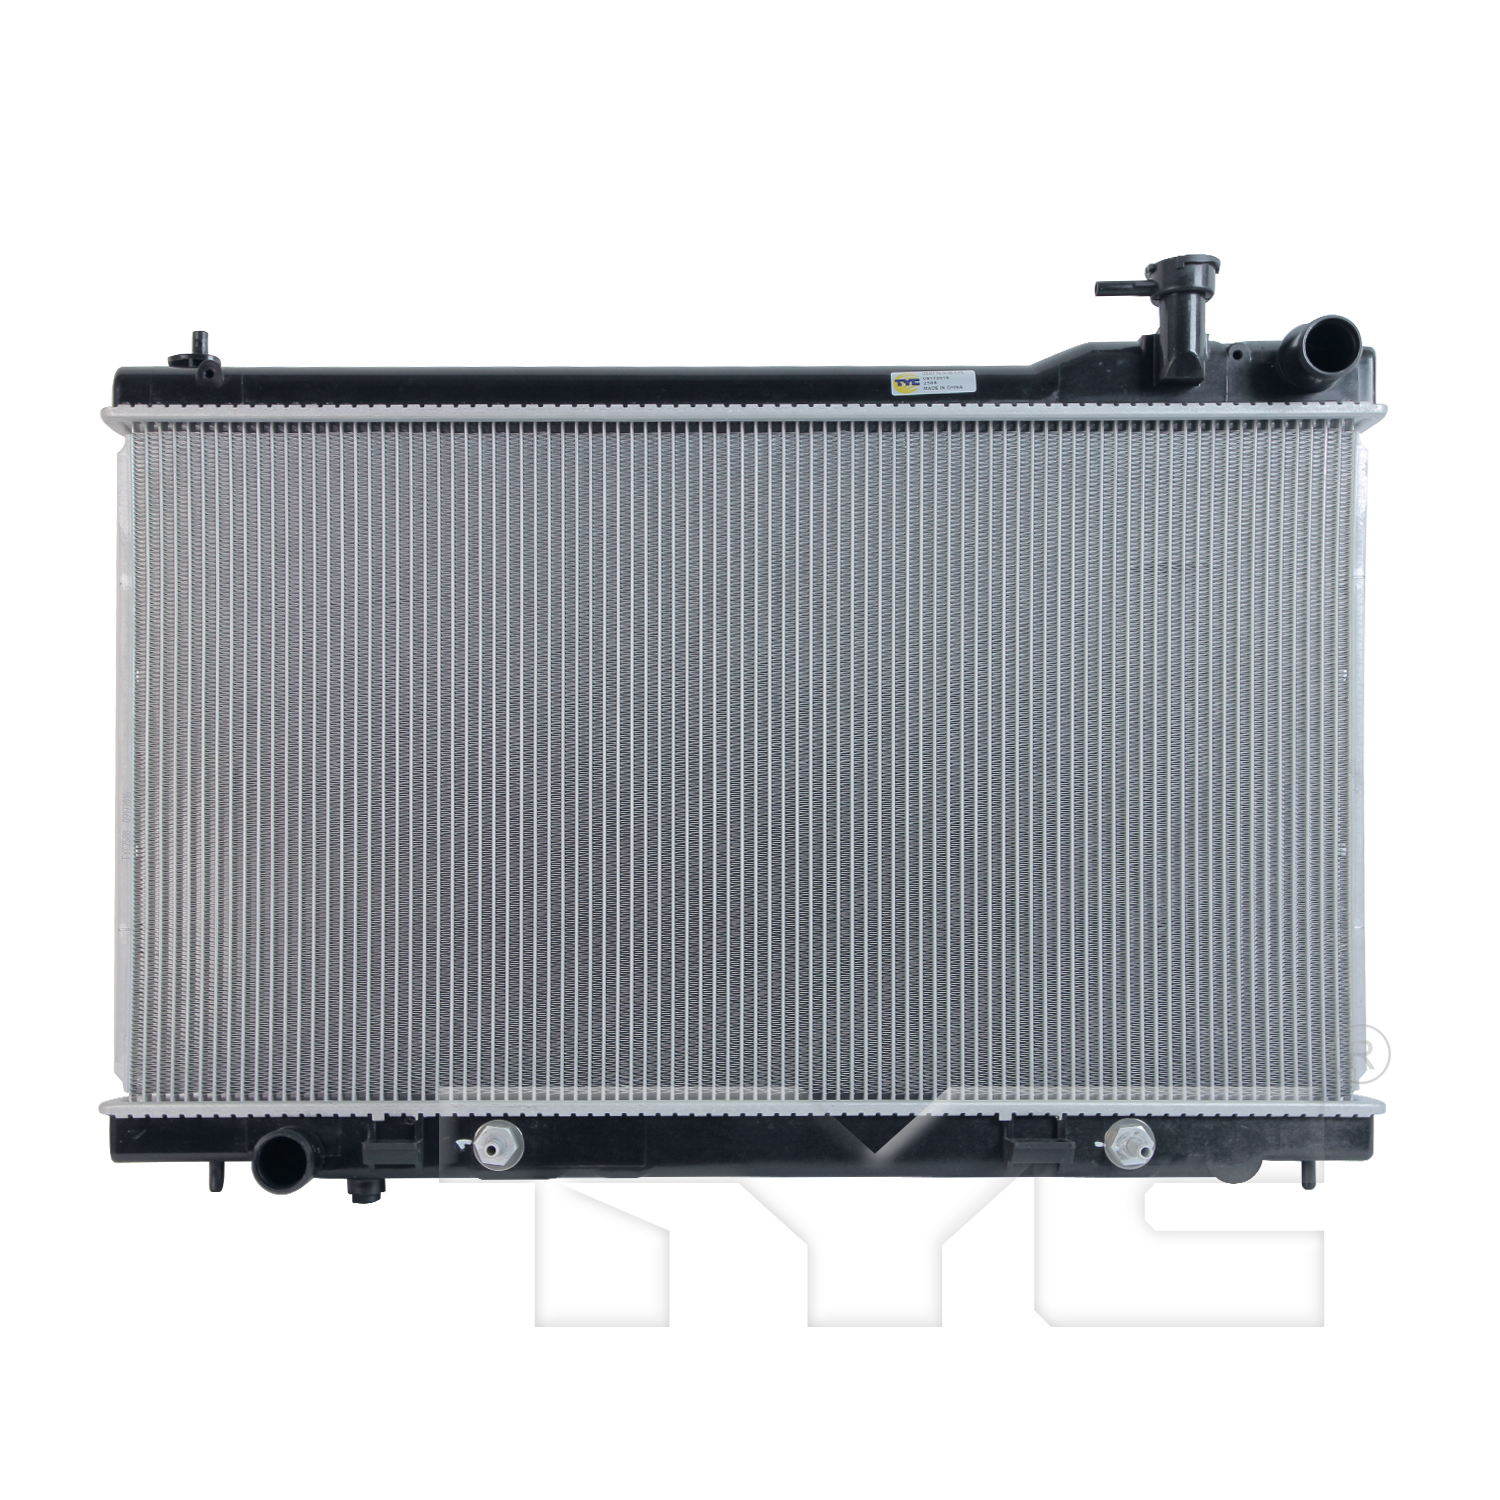 Aftermarket RADIATORS for INFINITI - G35, G35,03-06,Radiator assembly